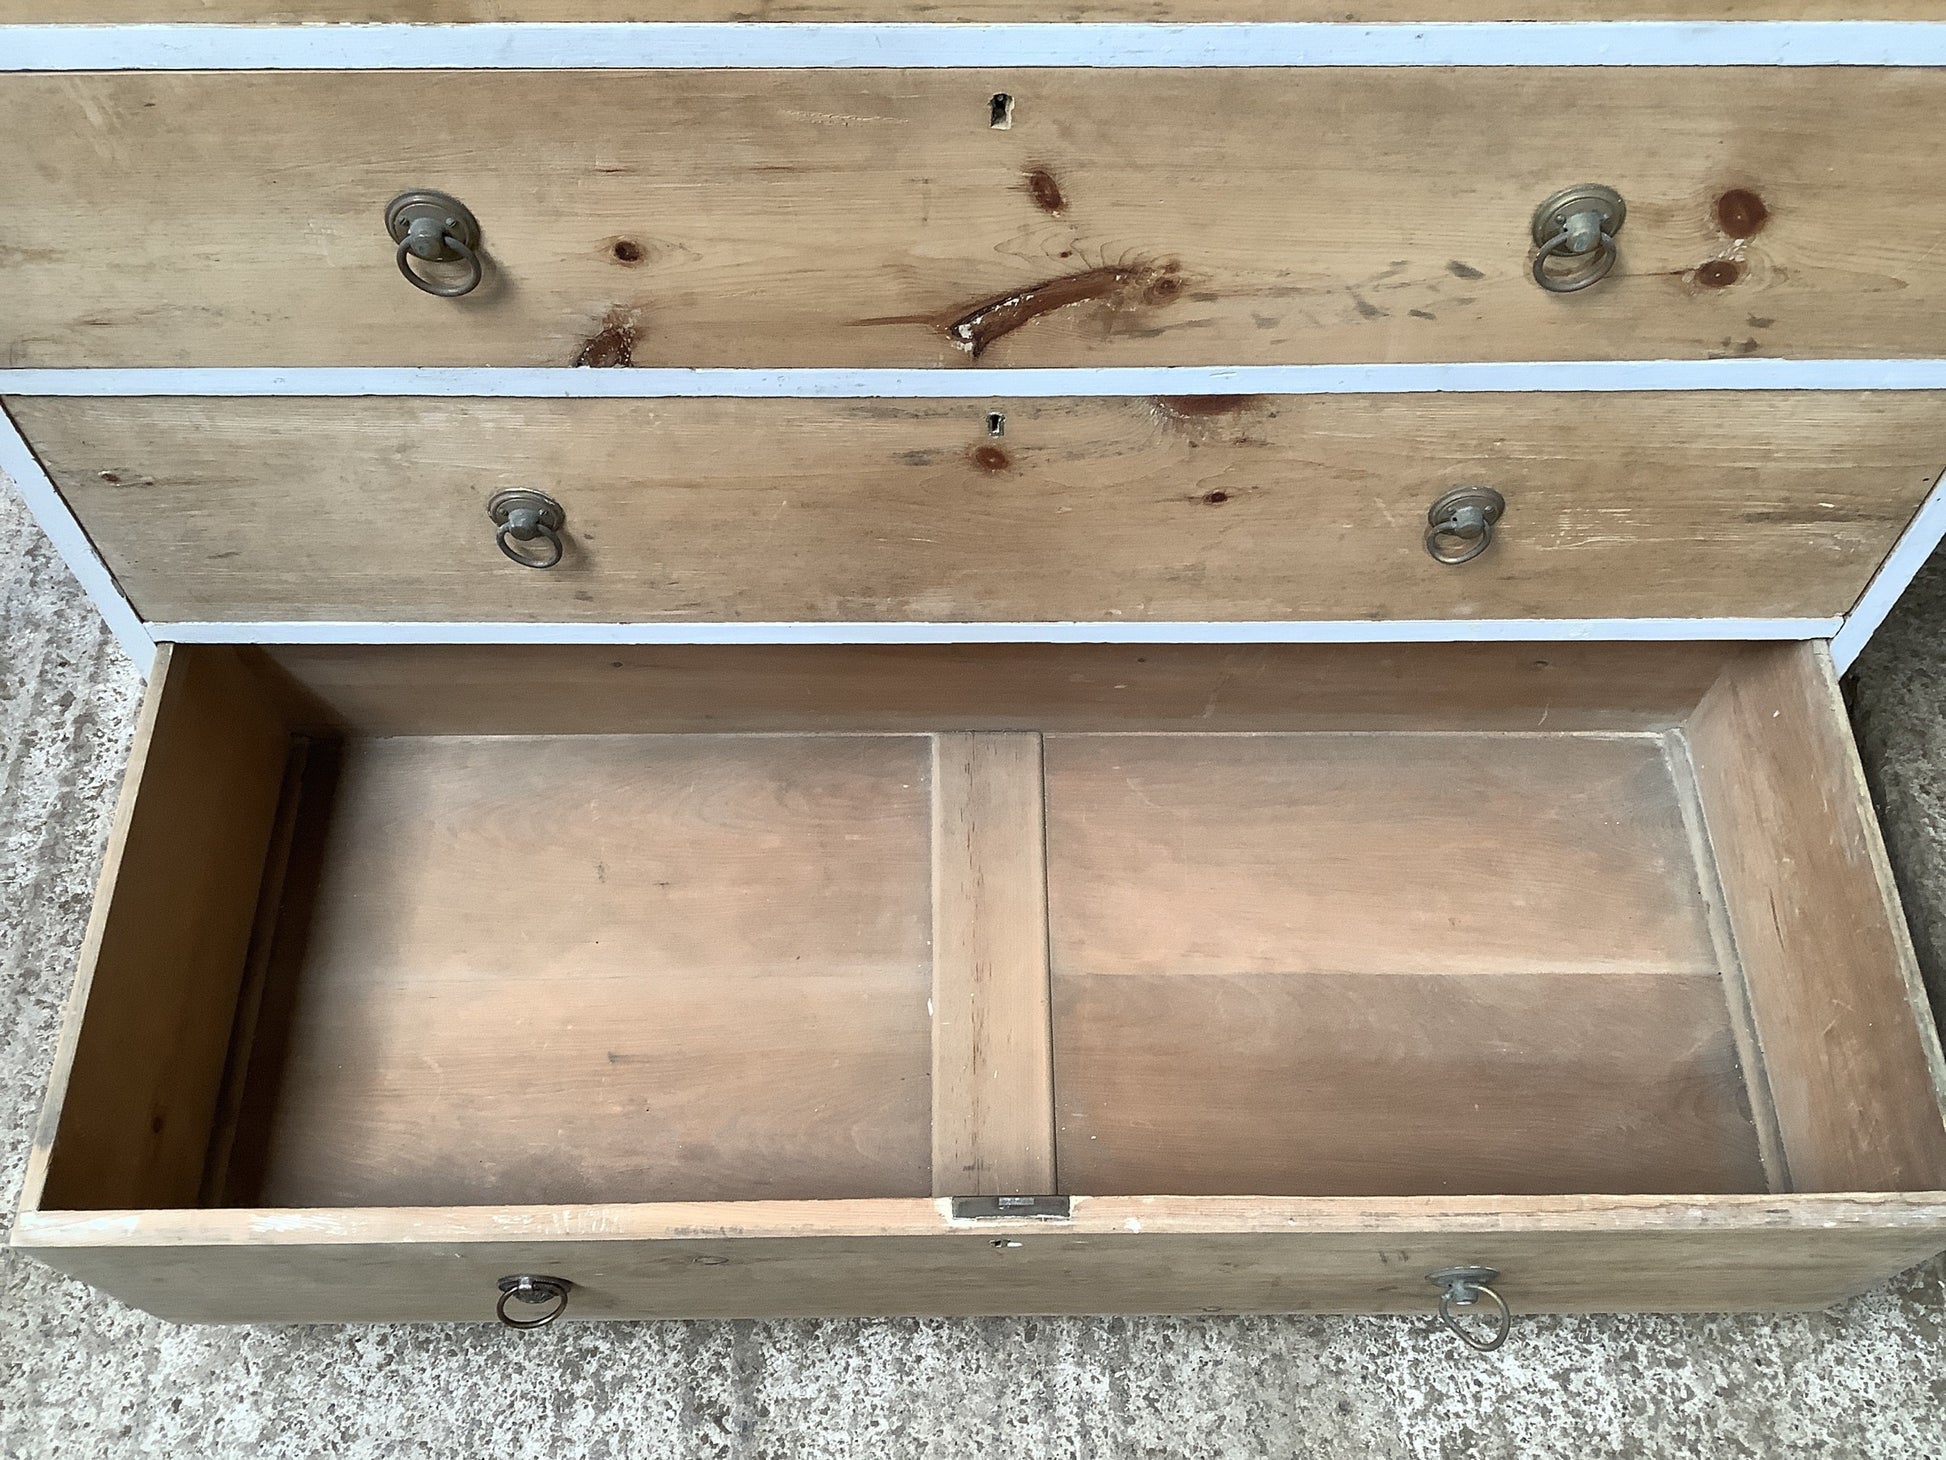 Bottom drawer